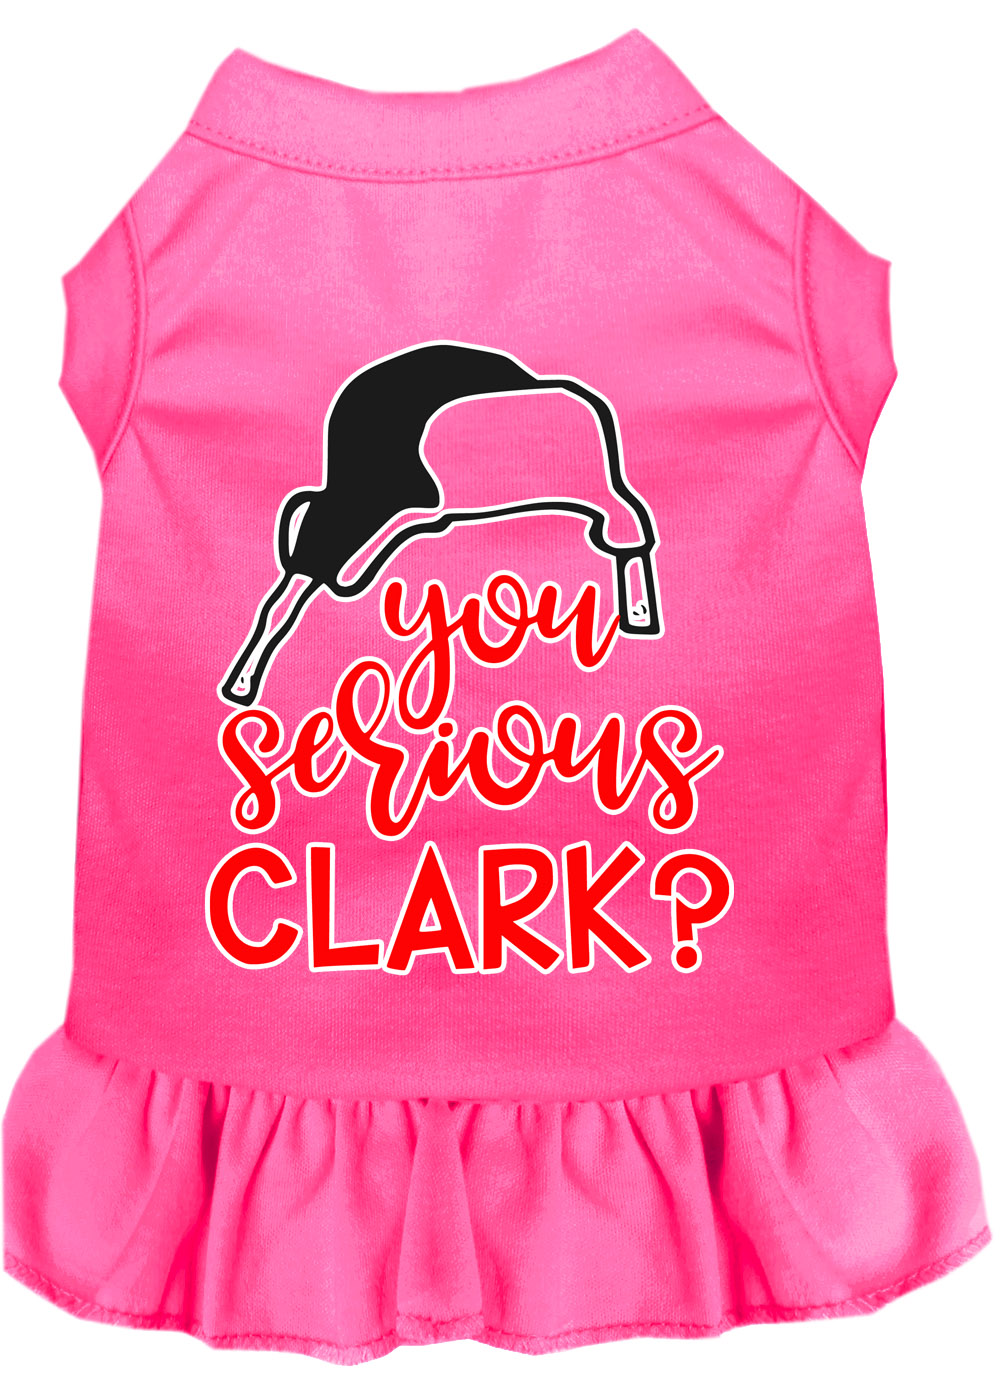 You Serious Clark? Screen Print Dog Dress Bright Pink Lg